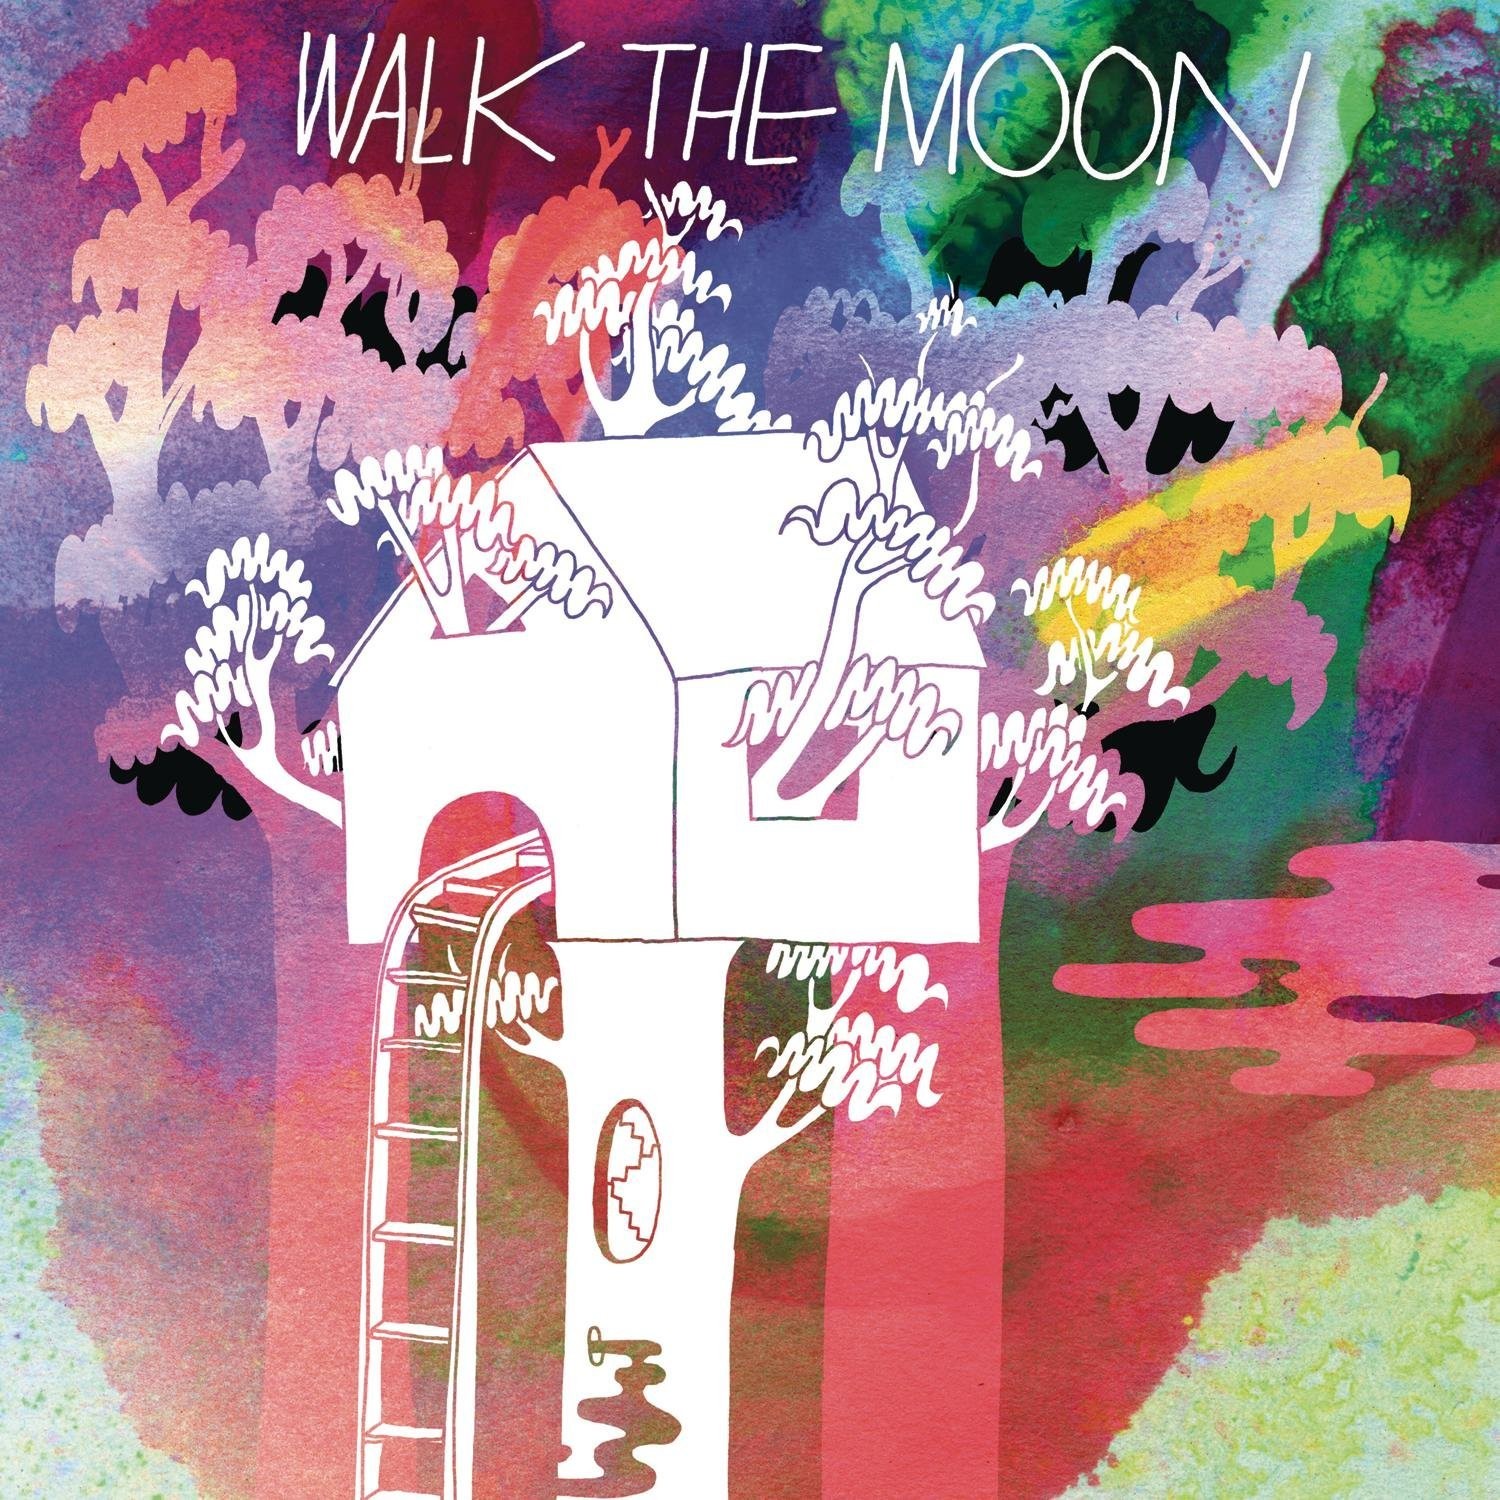 Walk The Moon - Walk The Moon Vinyl LP